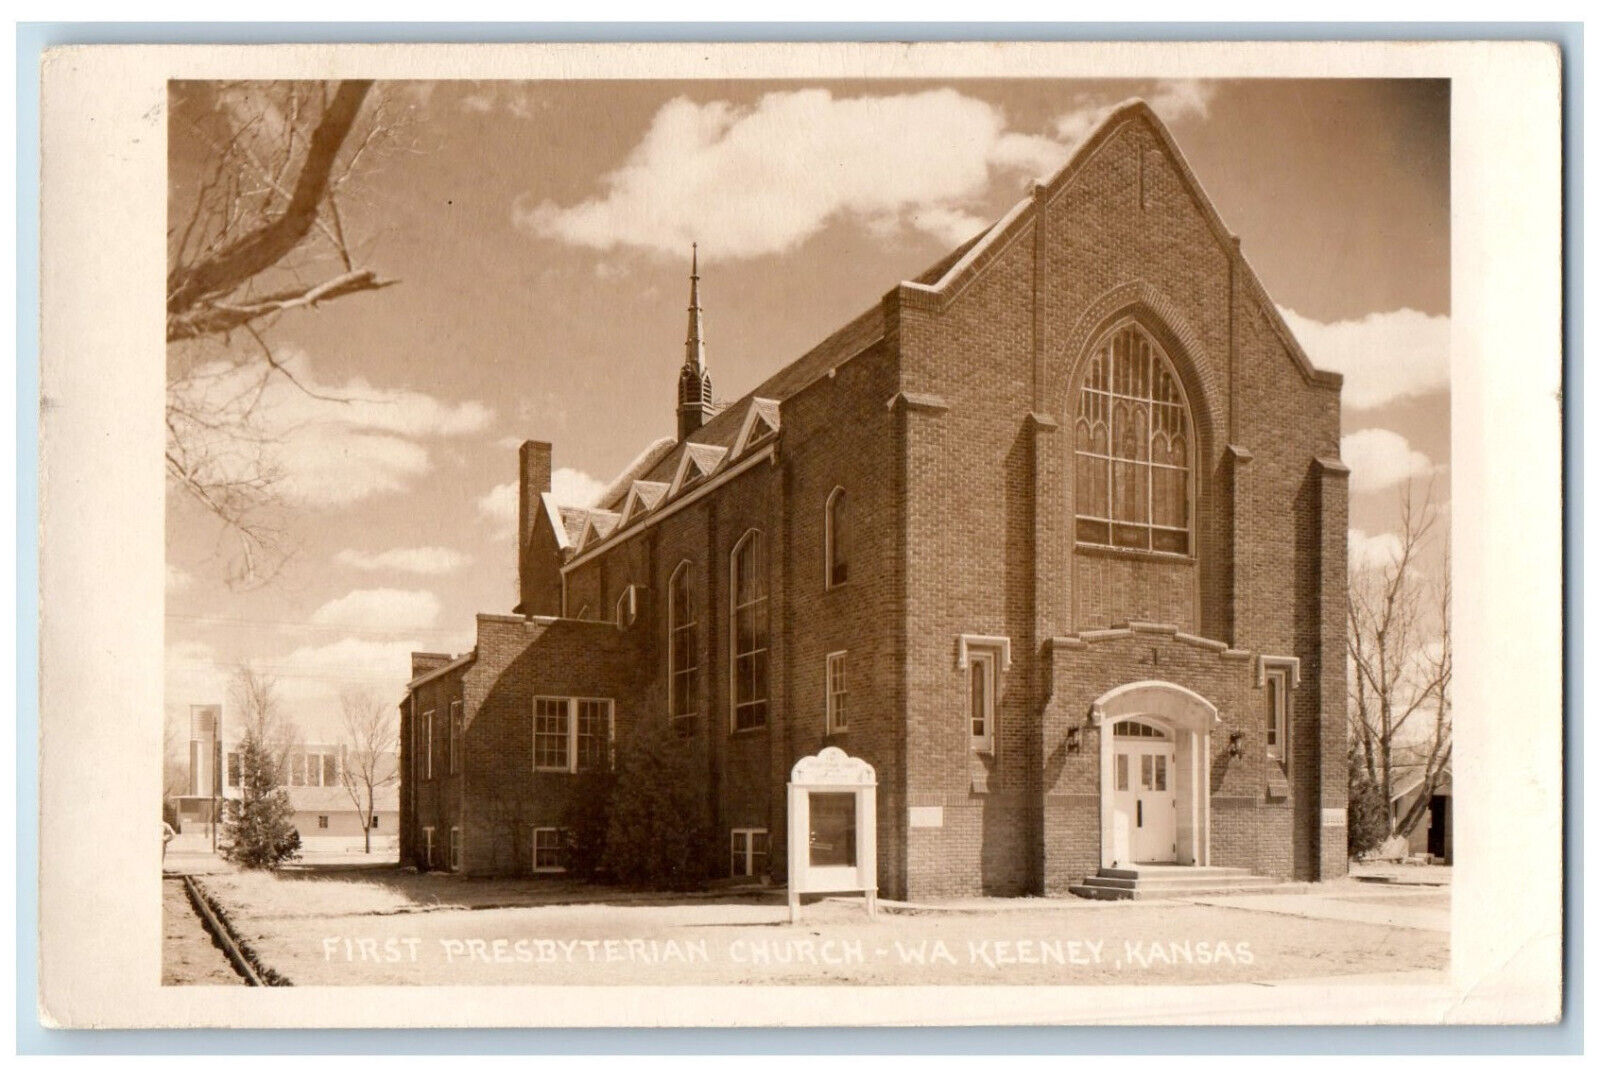 WA Keeney Kansas KS Postcard First Presbyterian c1950's Unposted RPPC Photo